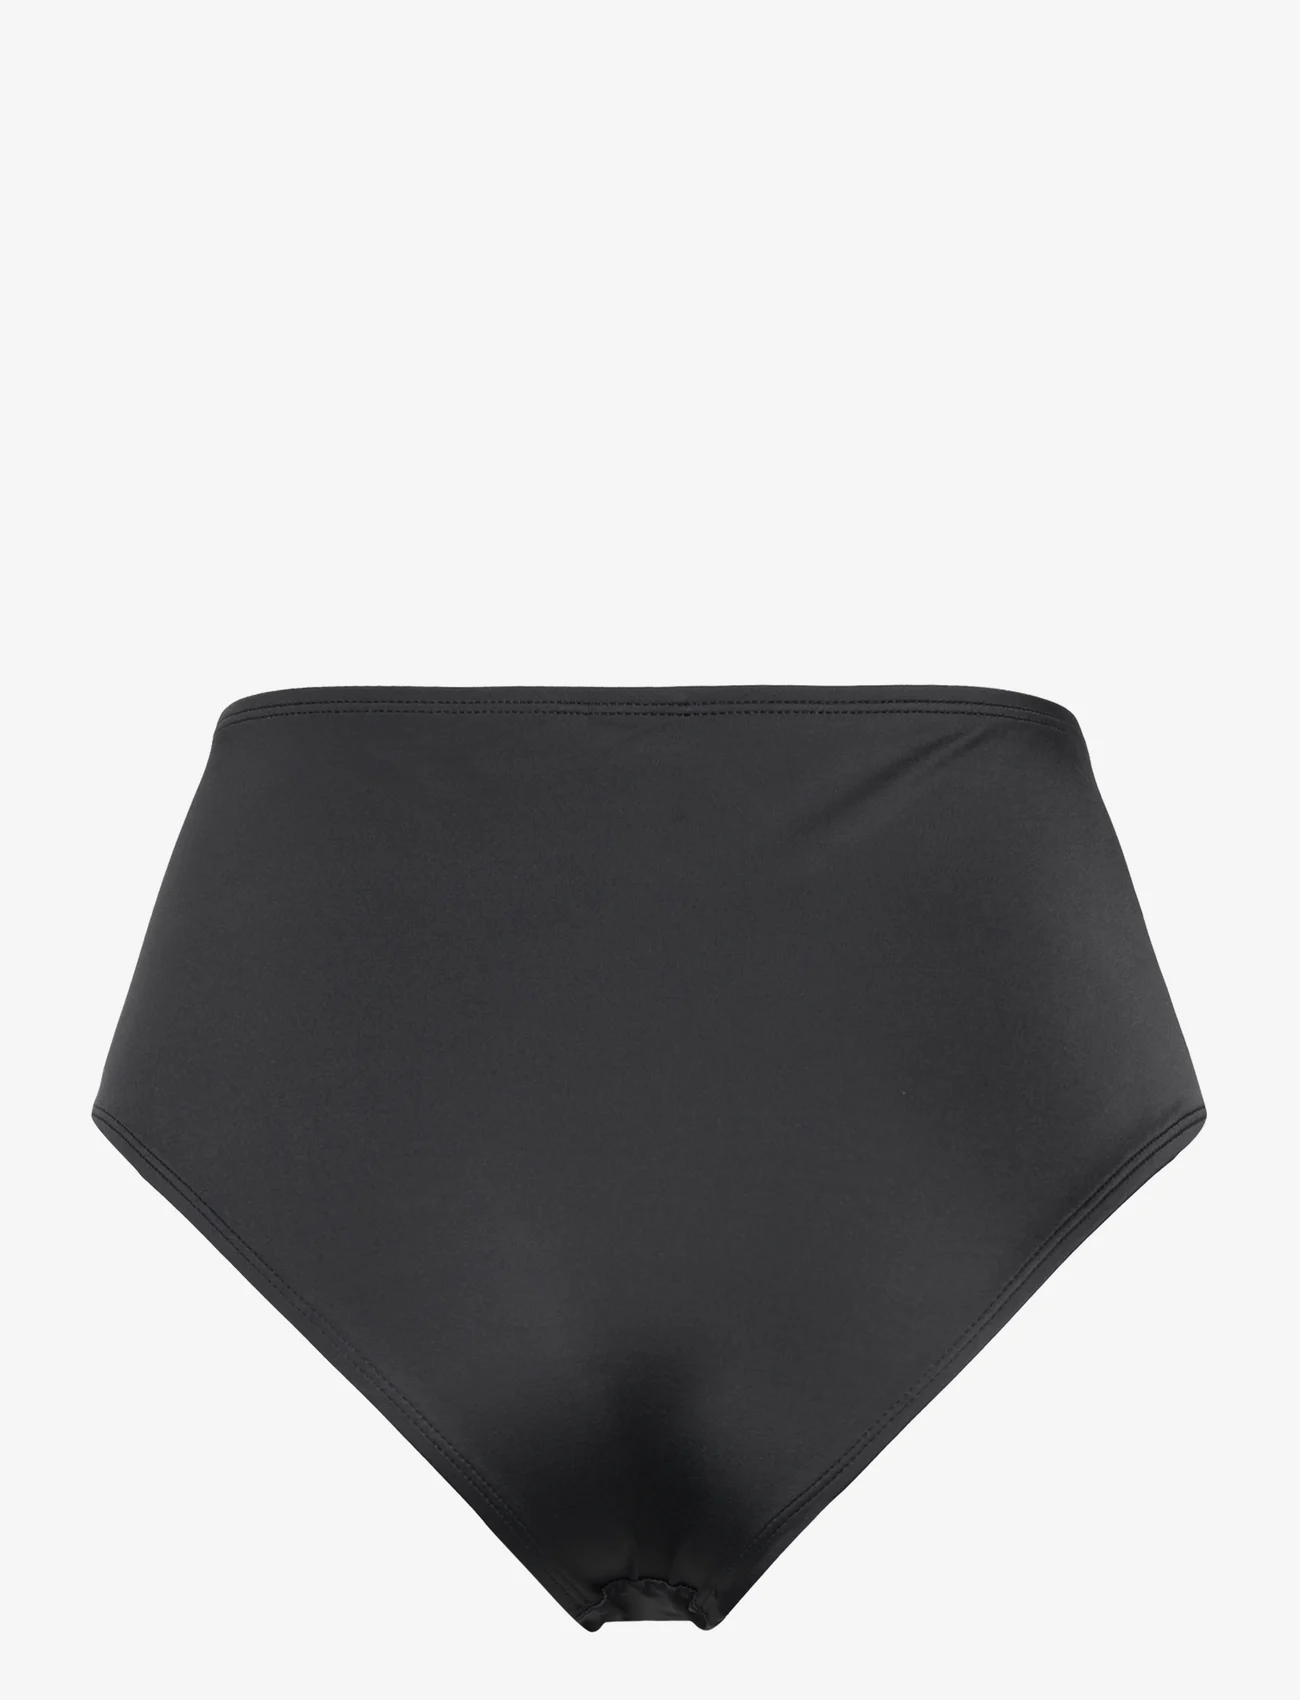 Hunkemöller - Luxe shaping cheeky hw - high waist bikini bottoms - nero - 1